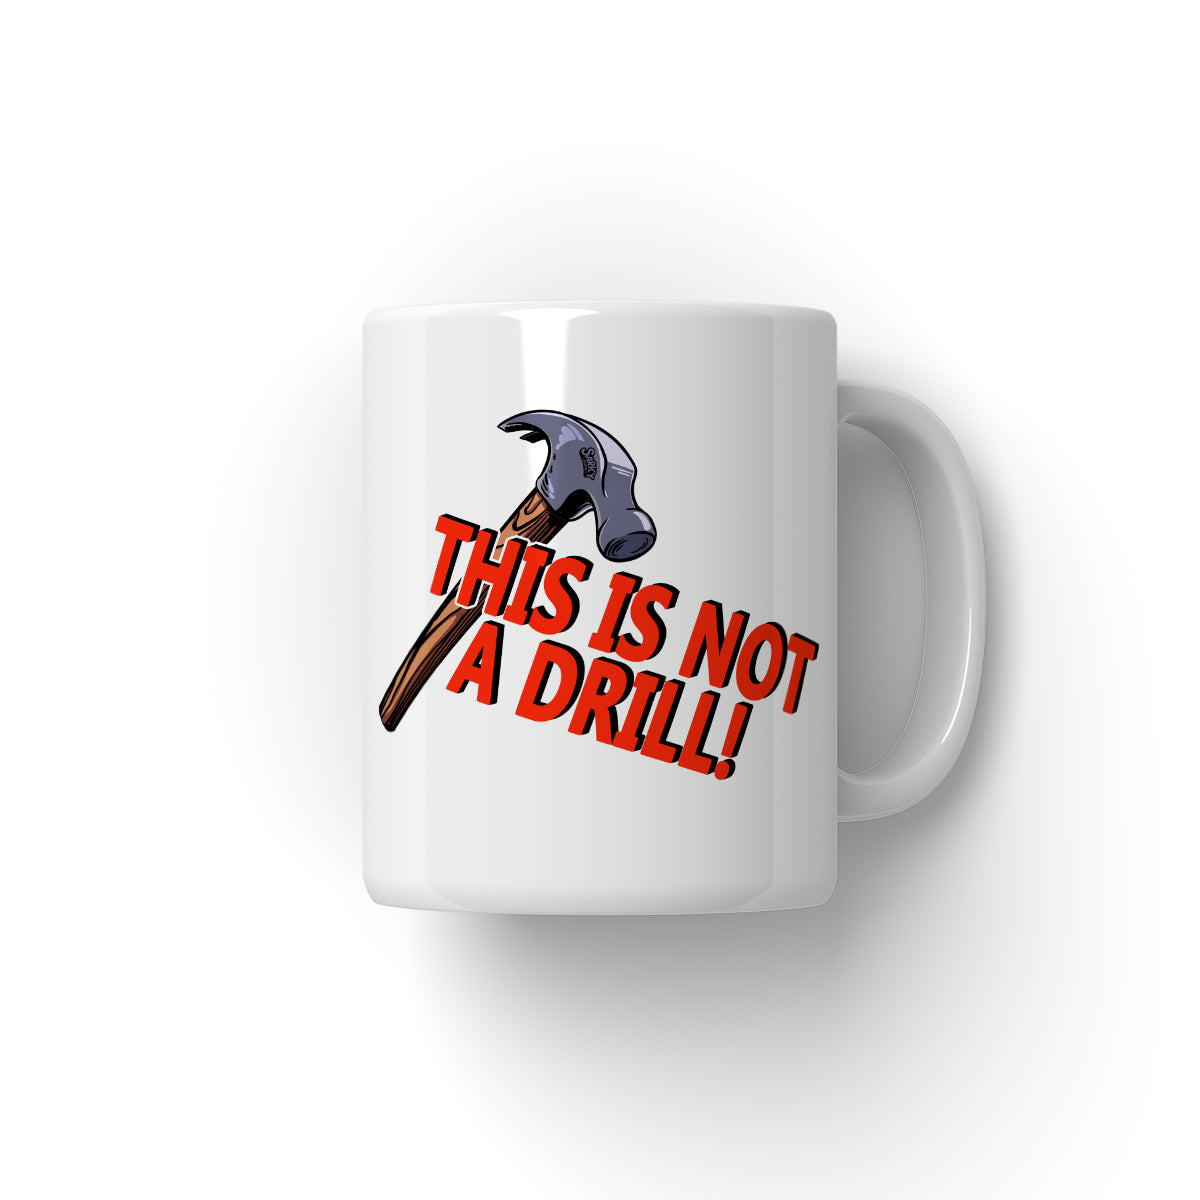 sarky sloth, funny office cups, office humor mugs, sarcastic mugs, funny rude mugs, novelty shaped mugs